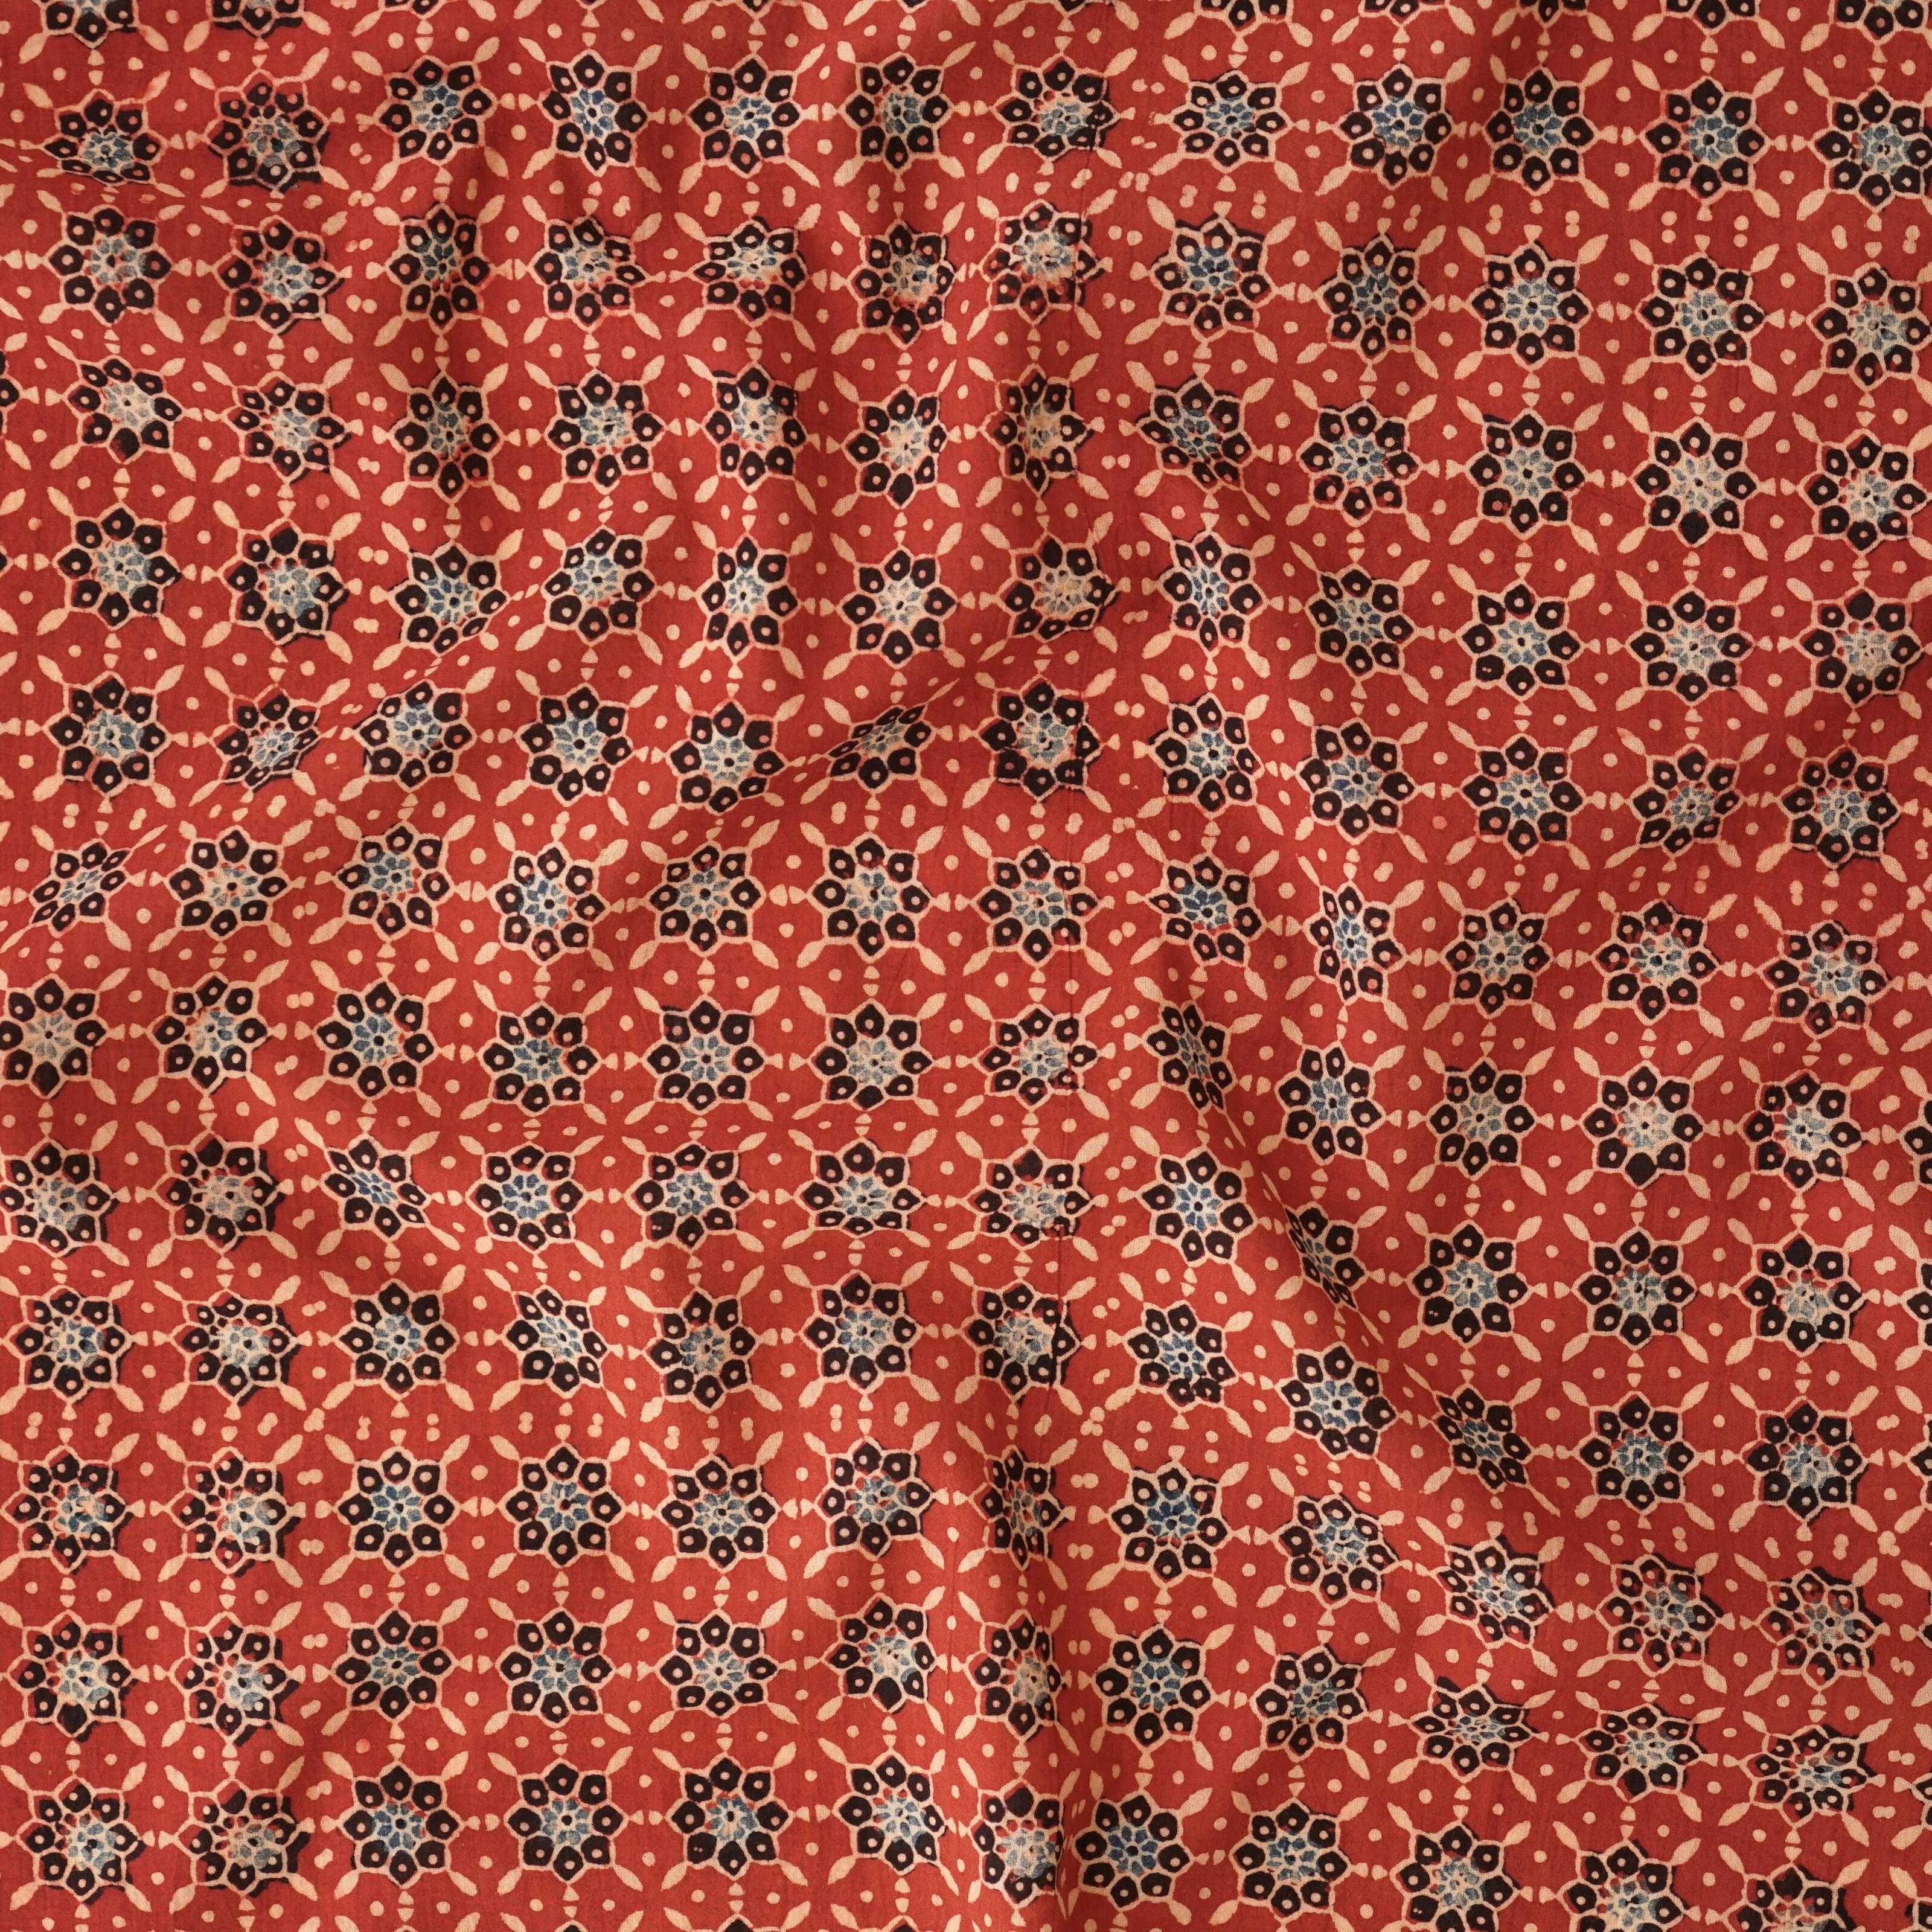 Ajrak Block-Printed Cotton - Starburst Print - Alizarin Red, Black, Indigo - Contrast